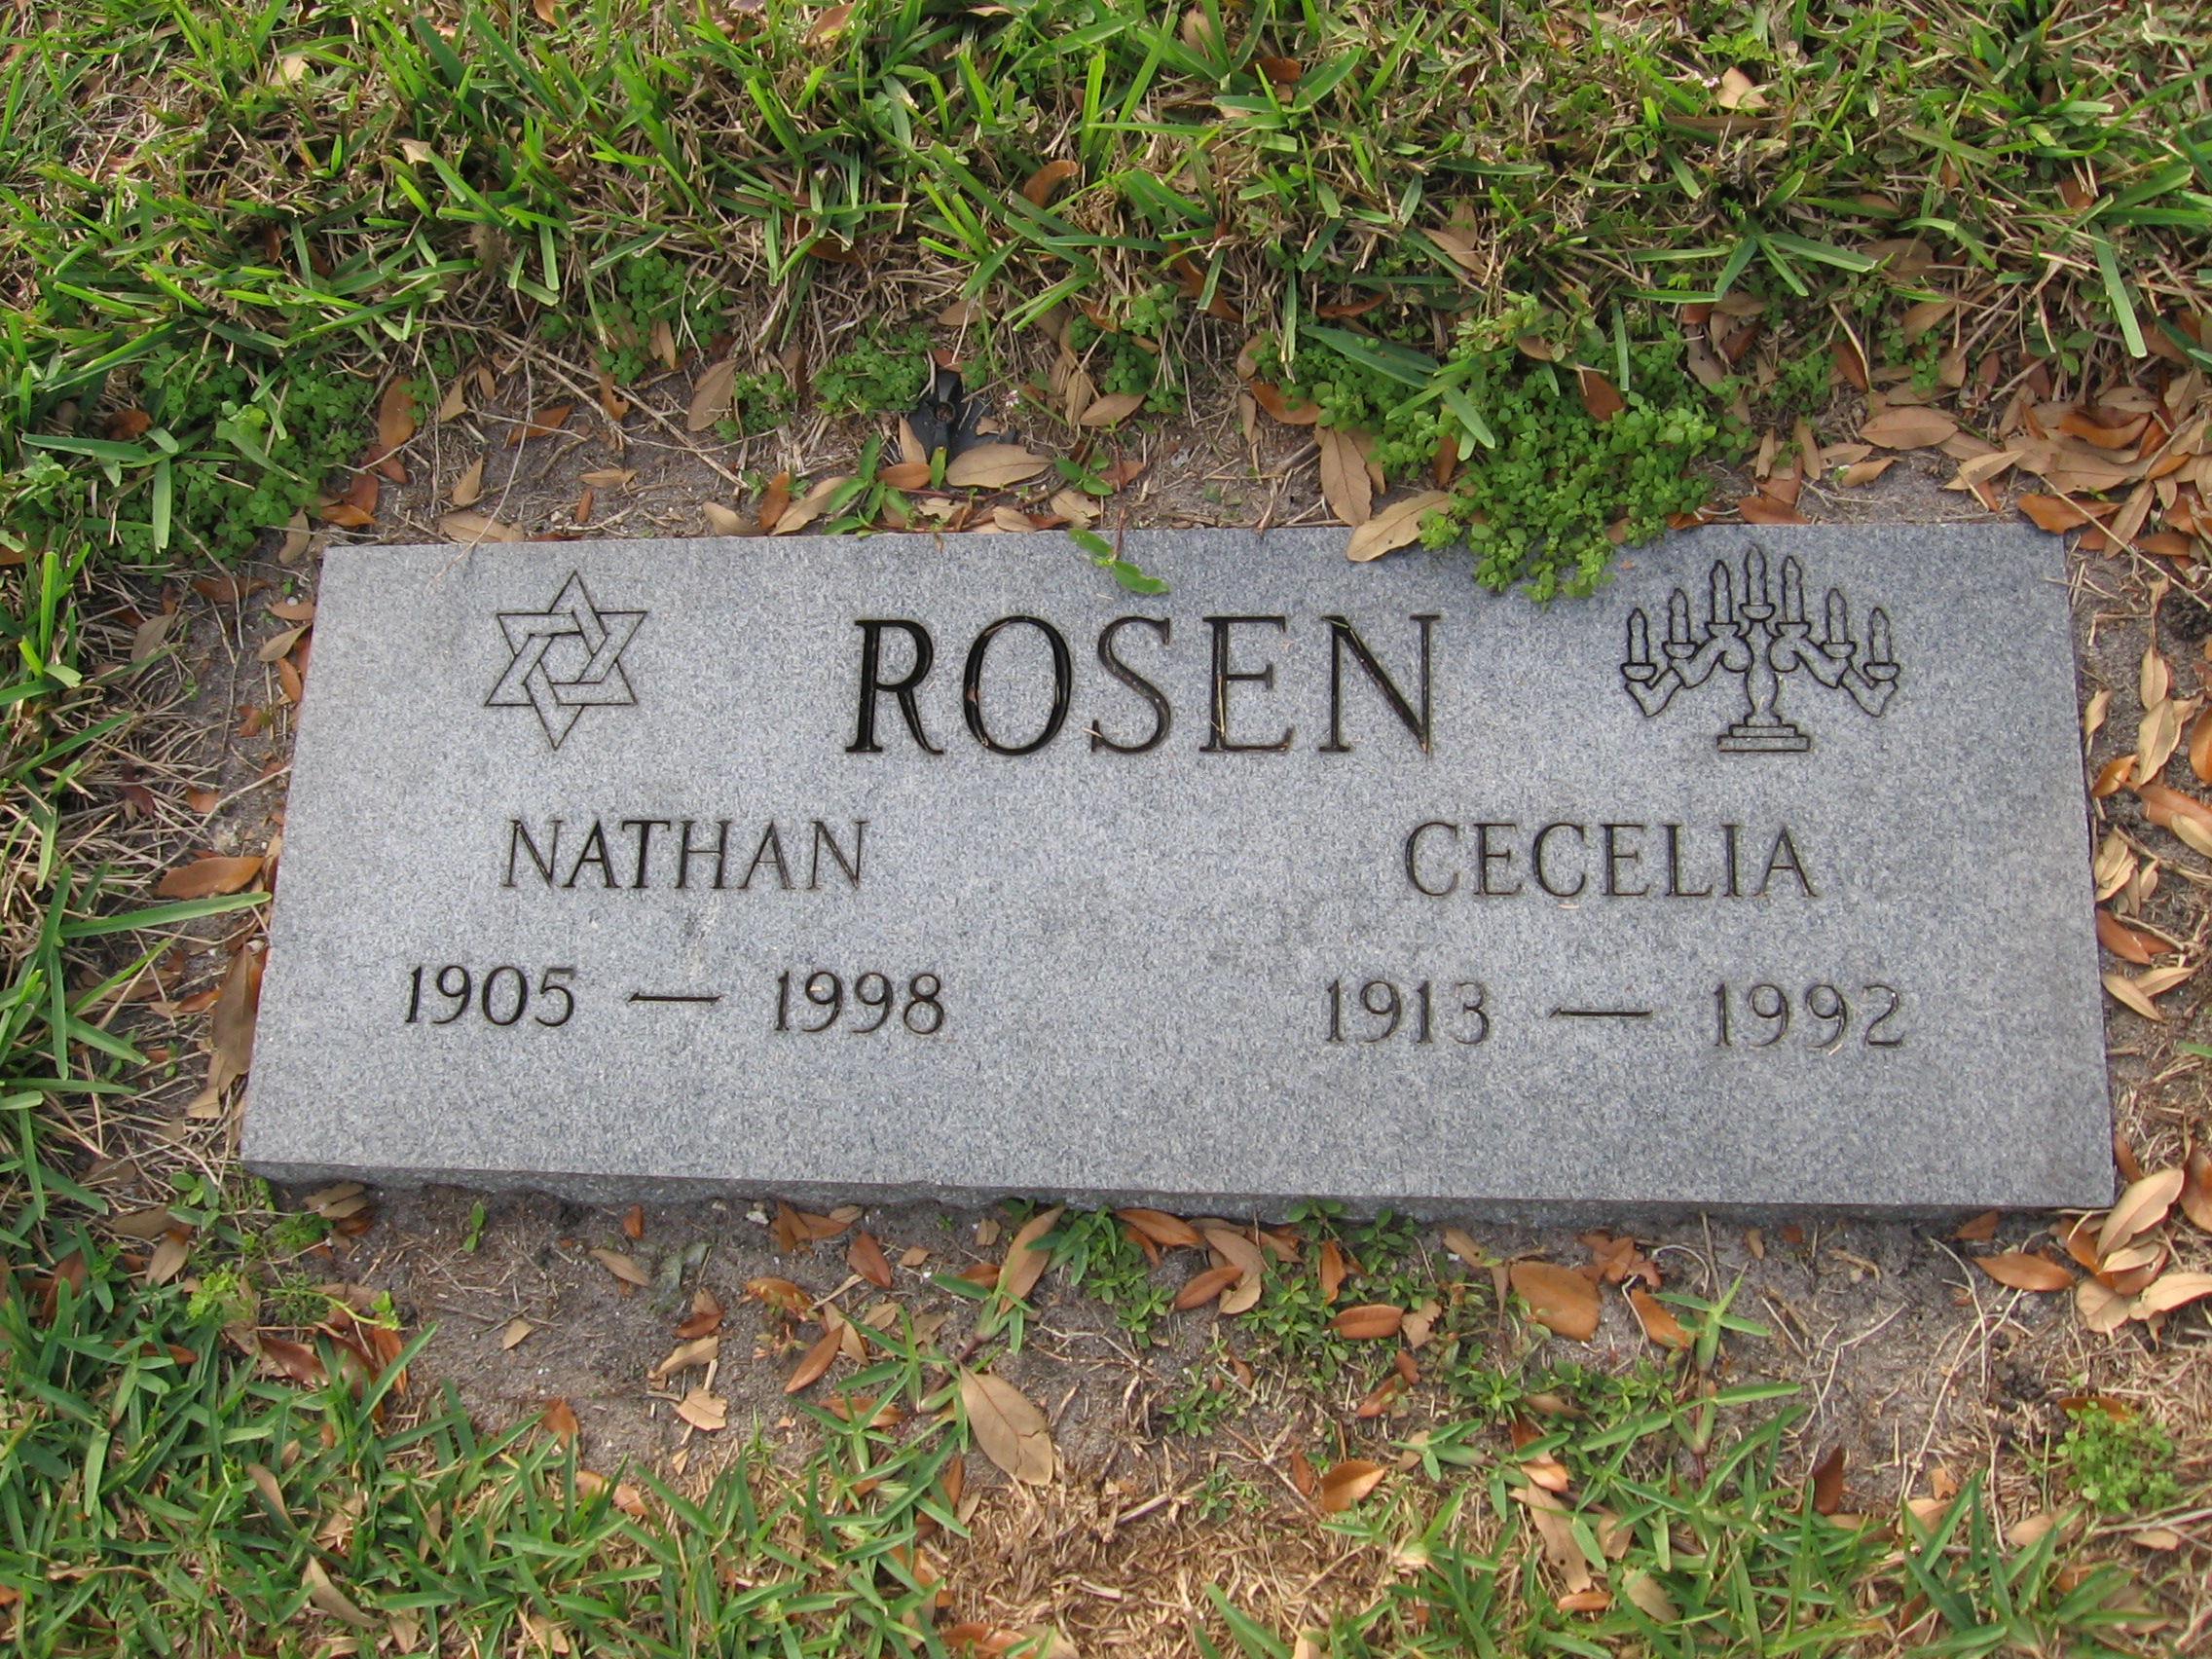 Cecelia Rosen